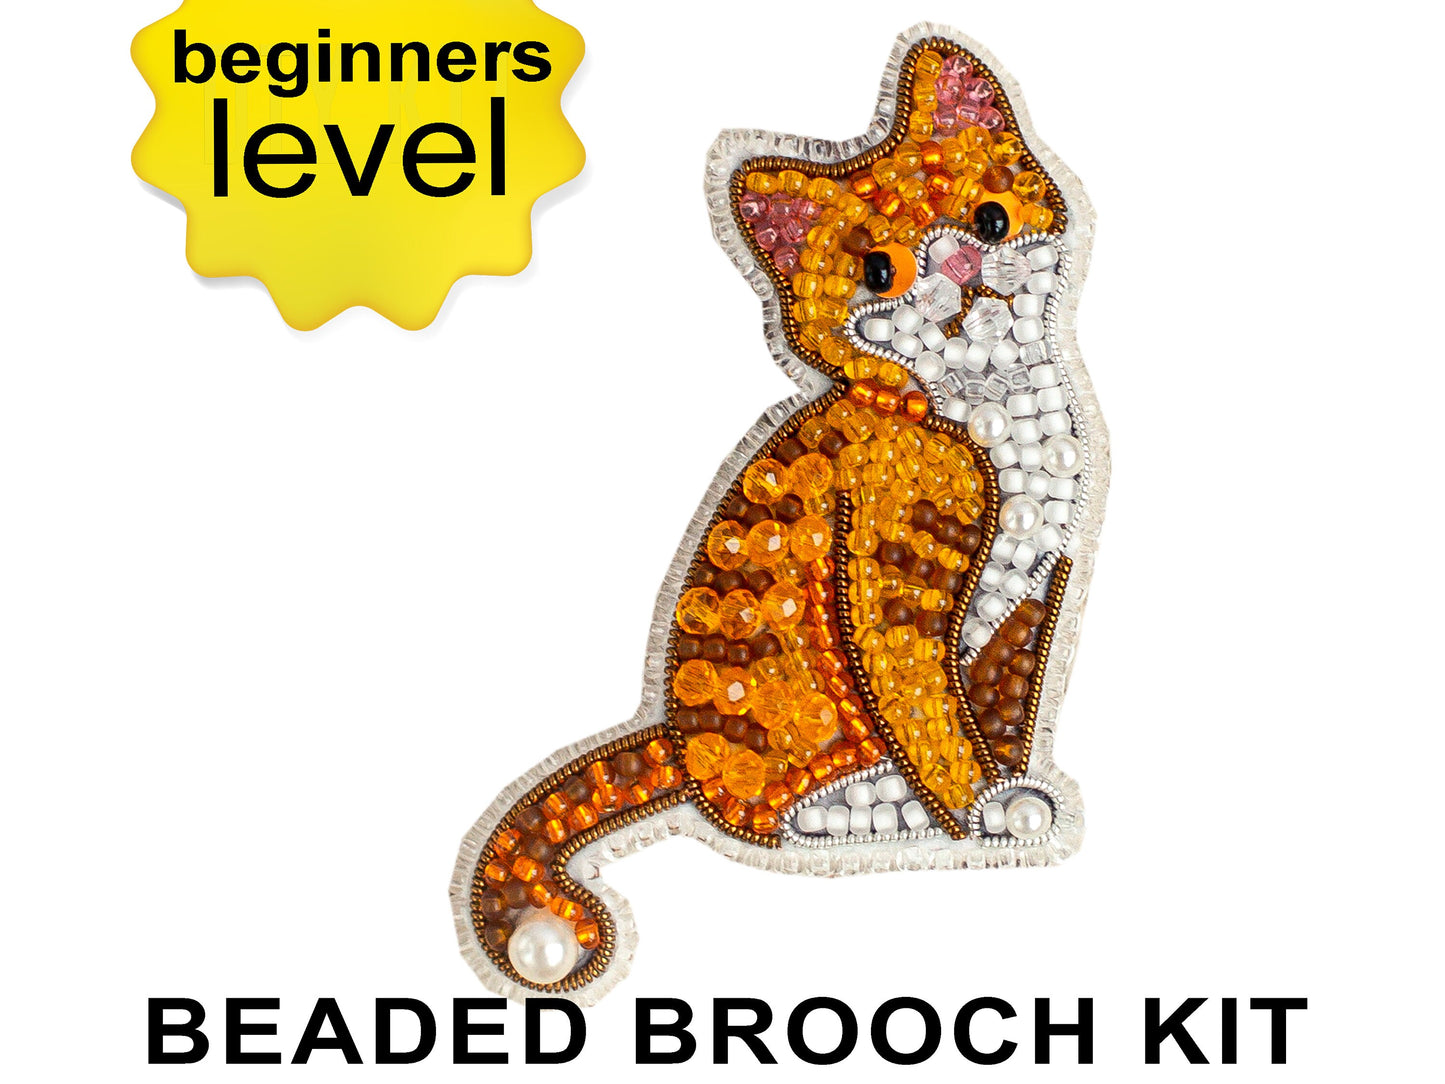 Ginger Cat Bead embroidery kit. Seed Bead Brooch kit. DIY Craft kit. Beadweaving Kit Needlework beading. Handmade Jewelry Making Kit